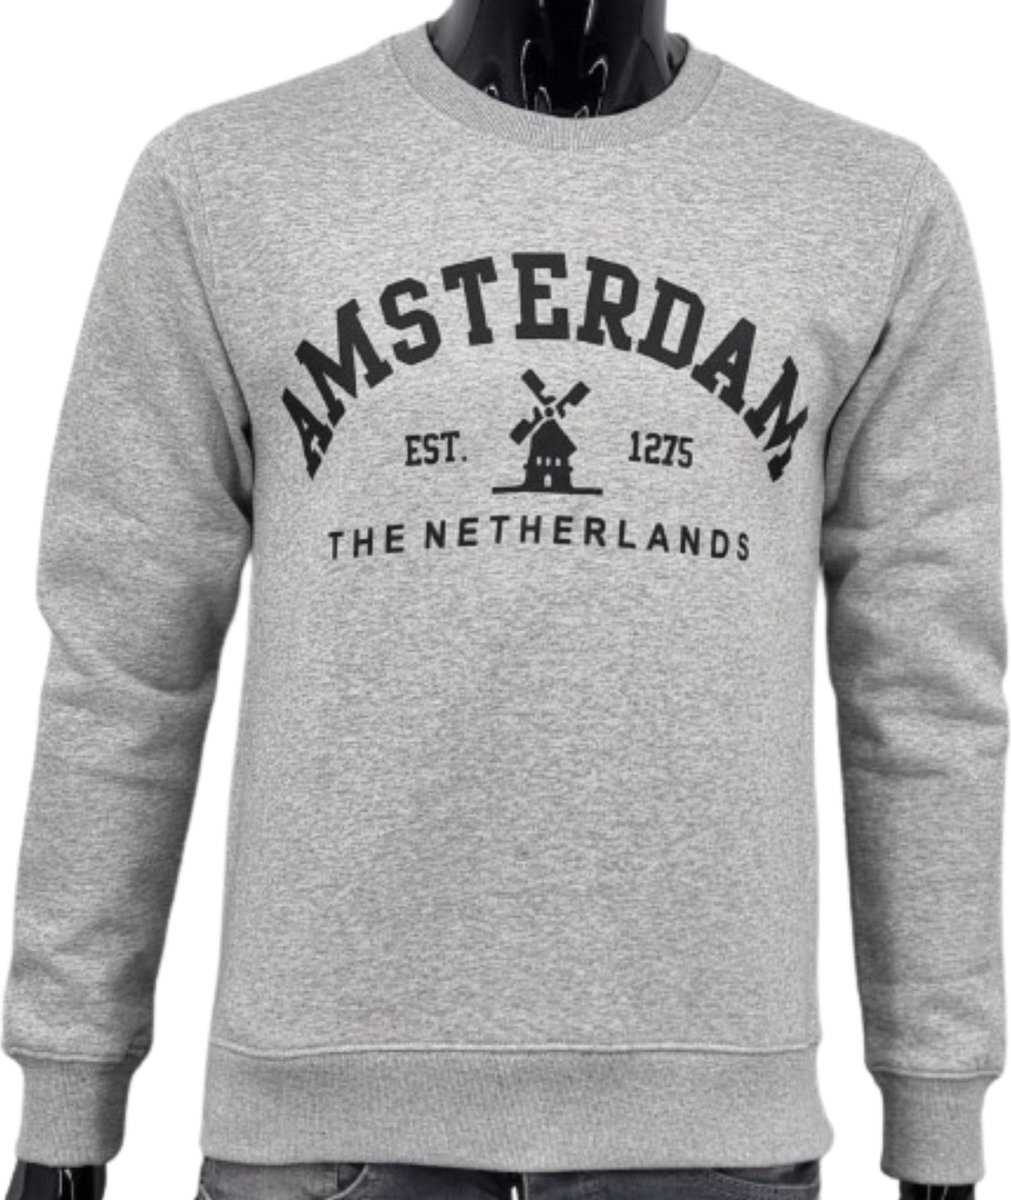 Hitman - Heren Trui - Heren Sweater - Holland Souvenir - Amsterdam Souvenir - Amsterdam Sweater - Grijs - Maat S